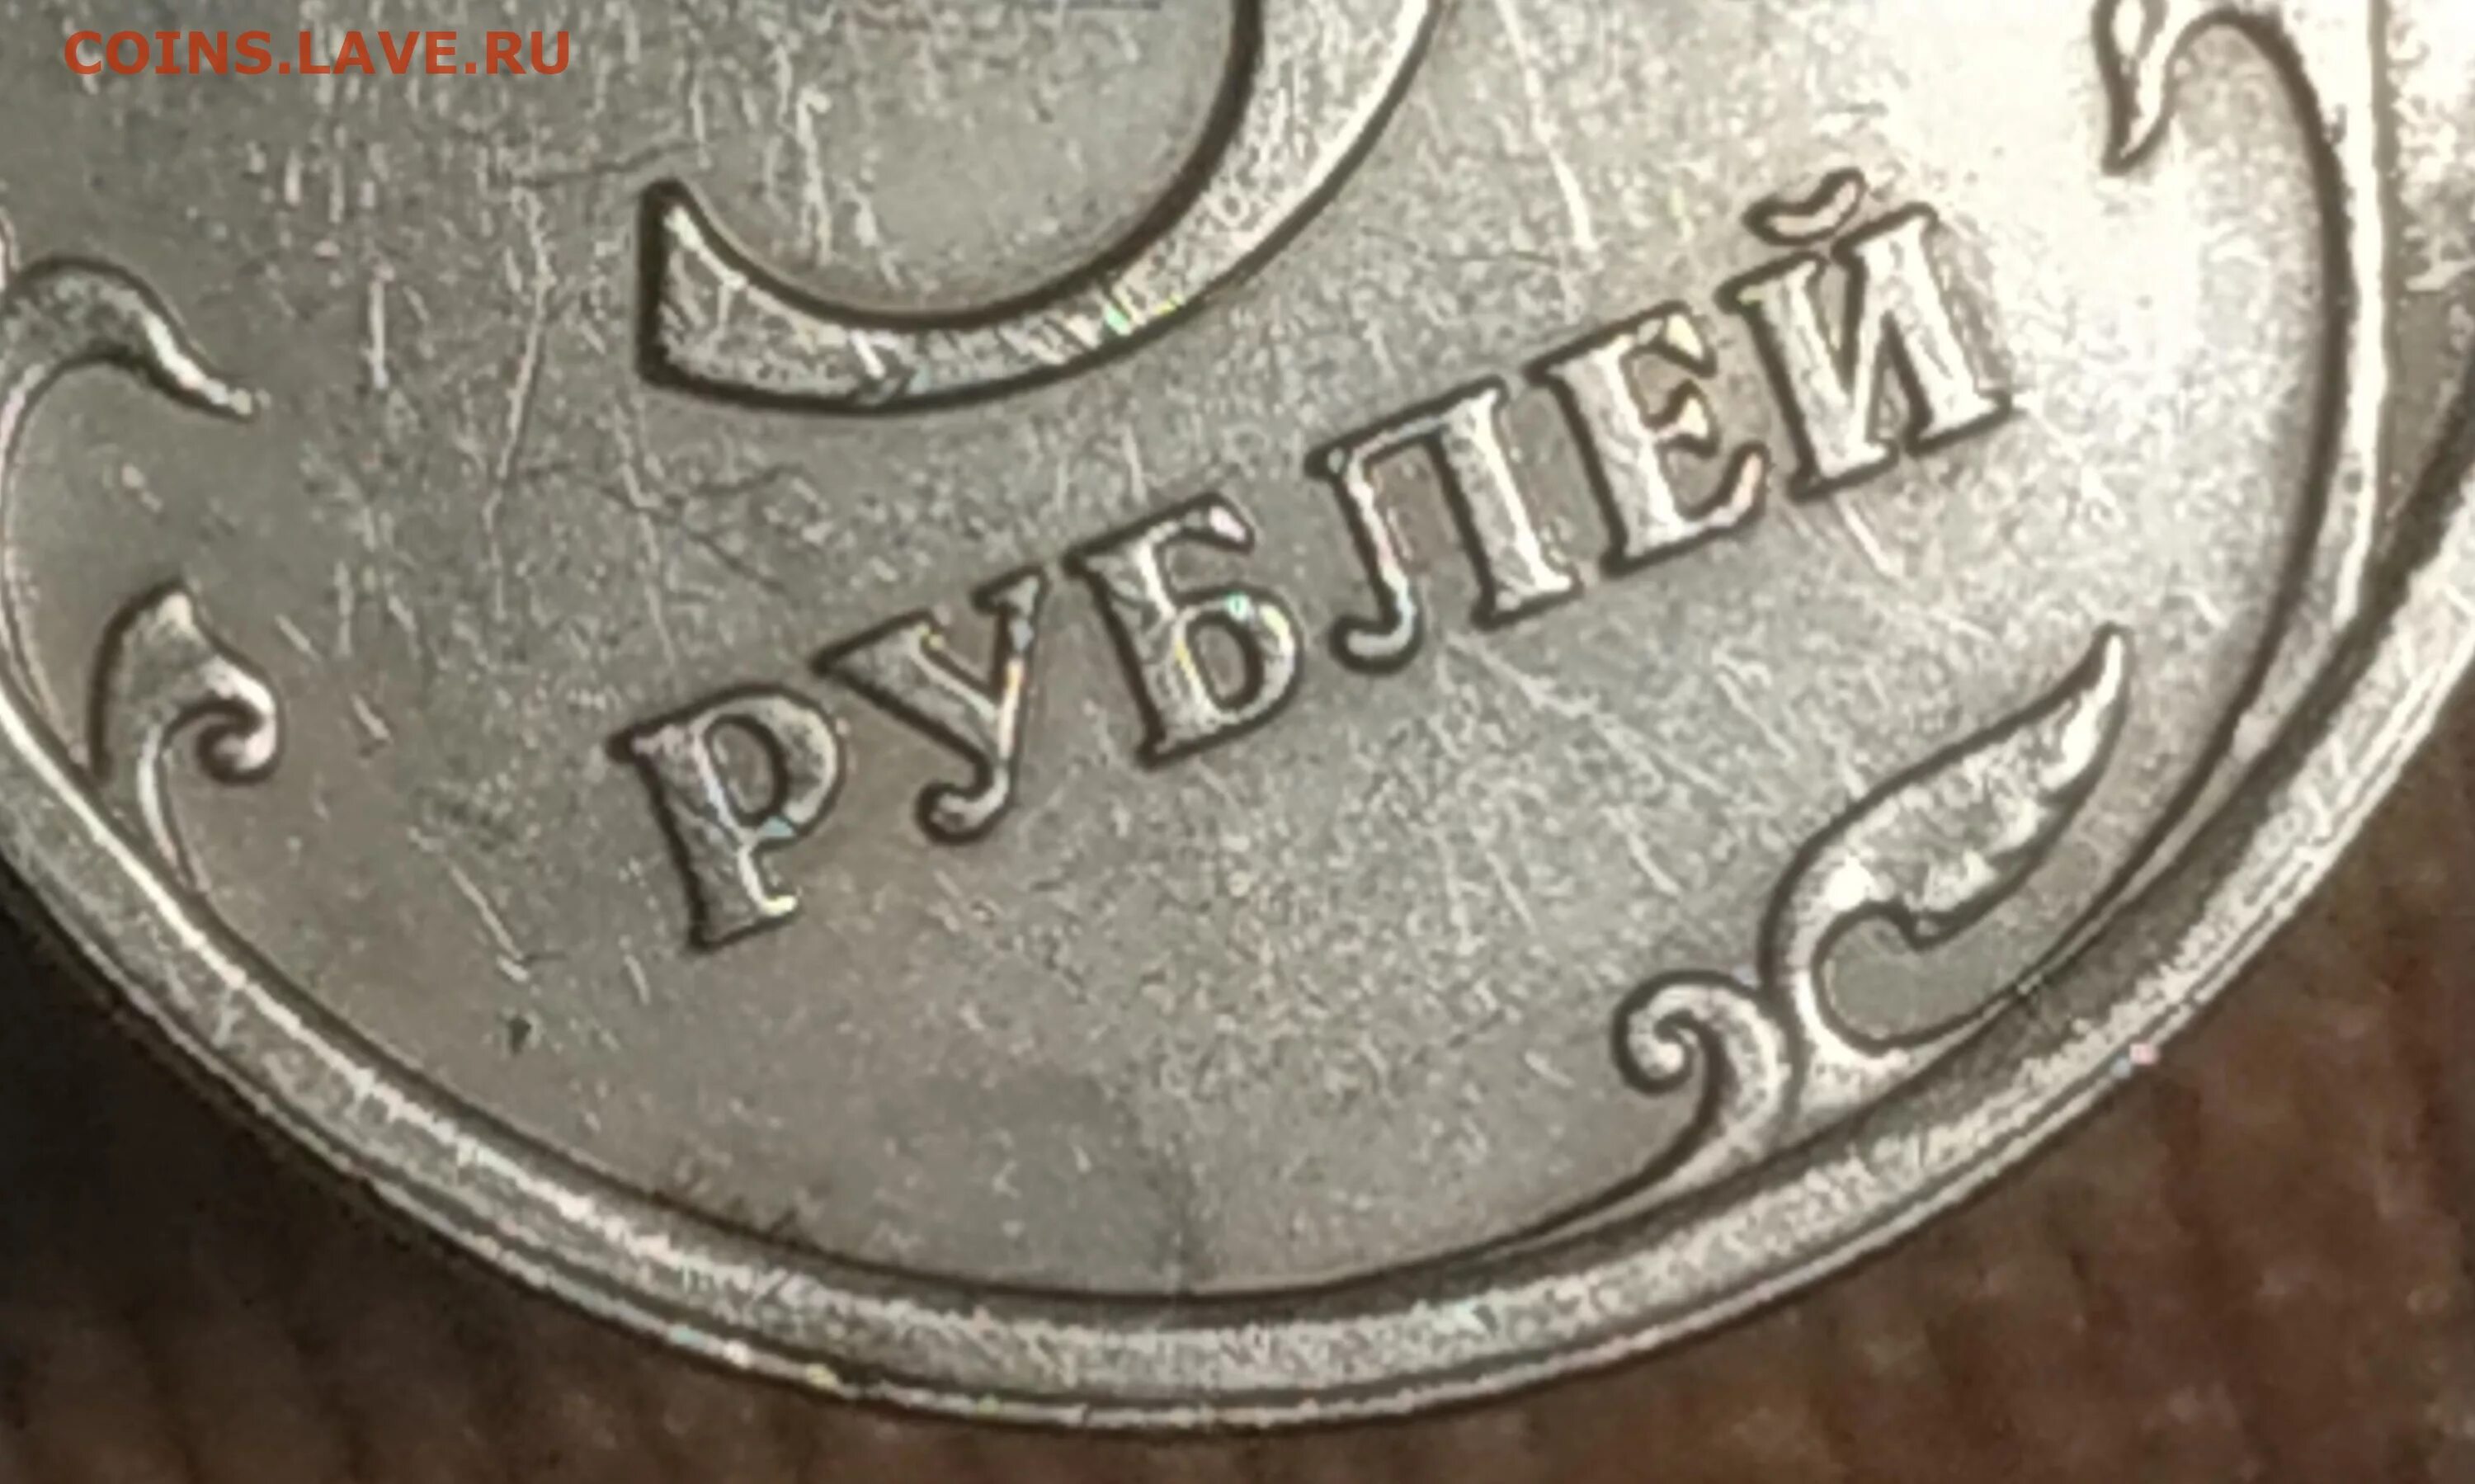 5 рублей 2009 ммд. Монеты ступеньки. Где ступеньки на монеты. 5 Рублей залился кант. 5 Рублей 2009 широкий кант магнитная цена.